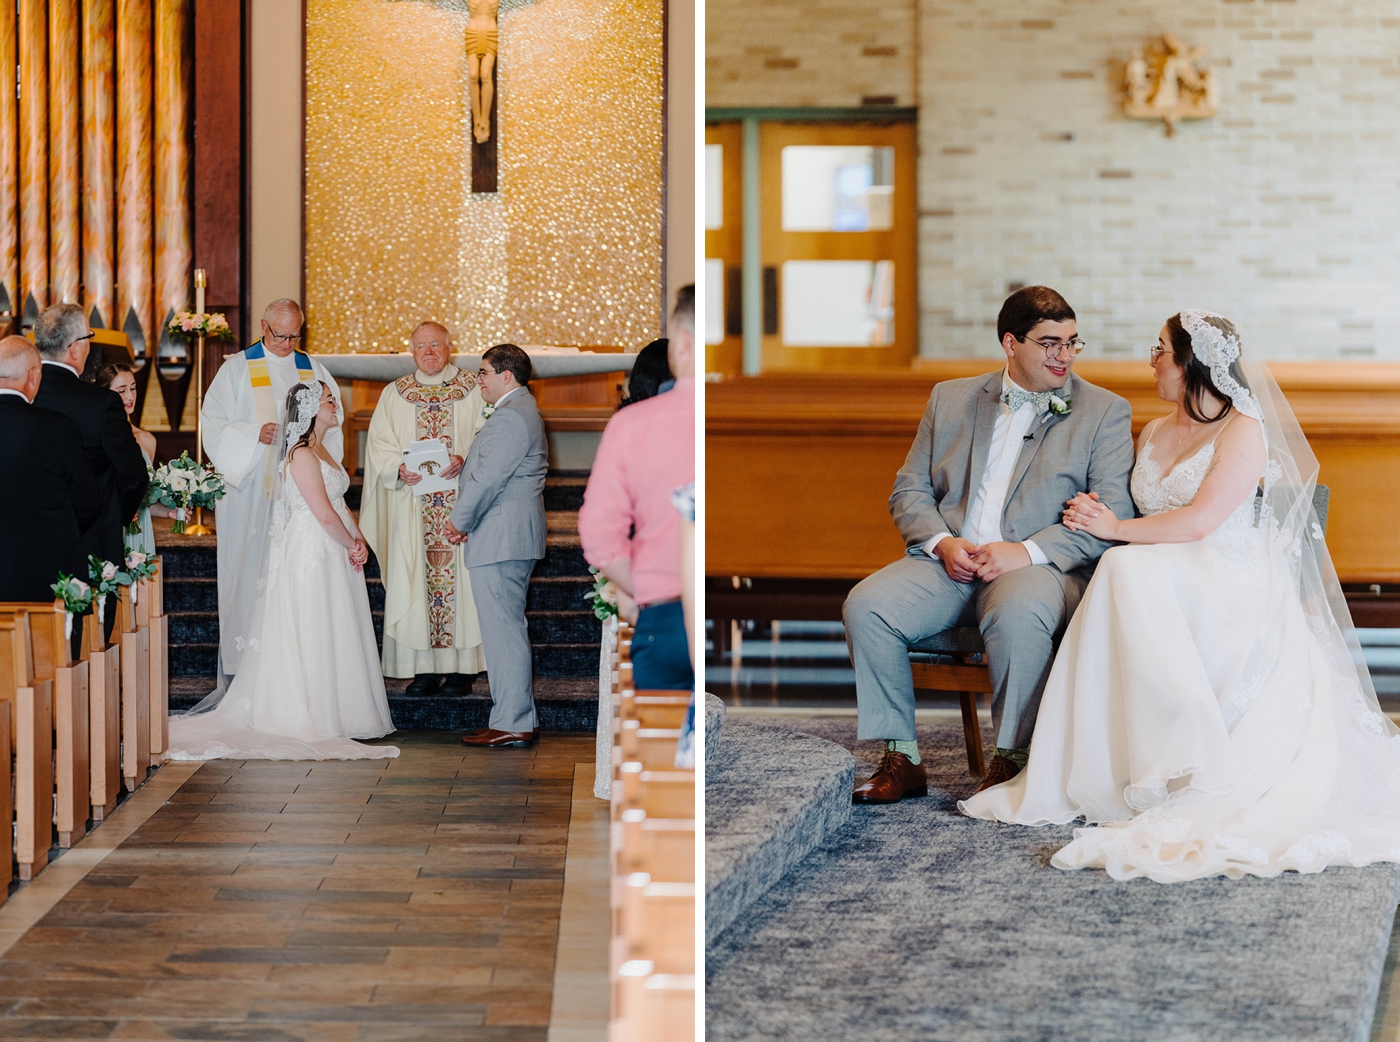 Wedding ceremony at St. Joseph's Church in Penfield, NY